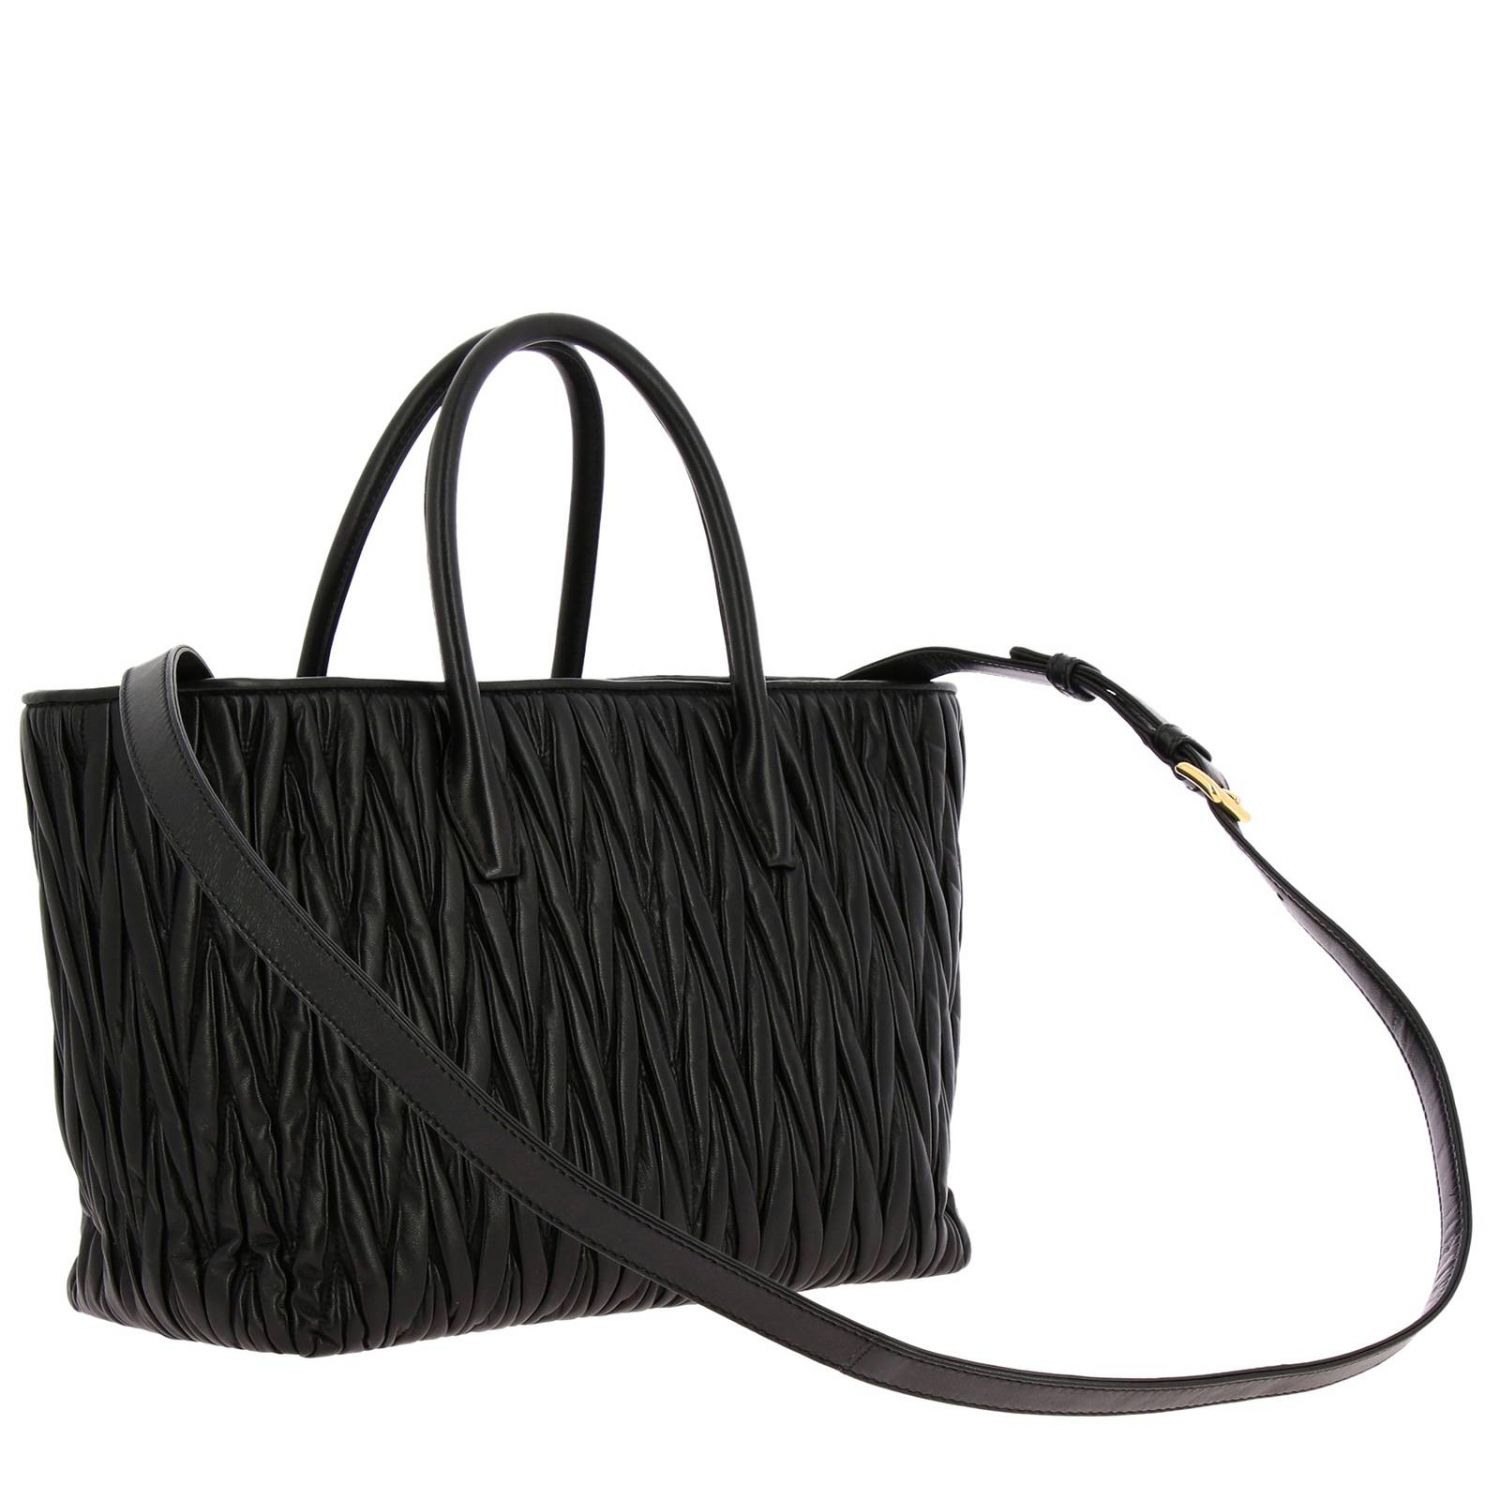 MIU MIU: shopping bag in matelassé leather with shoulder strap | Tote